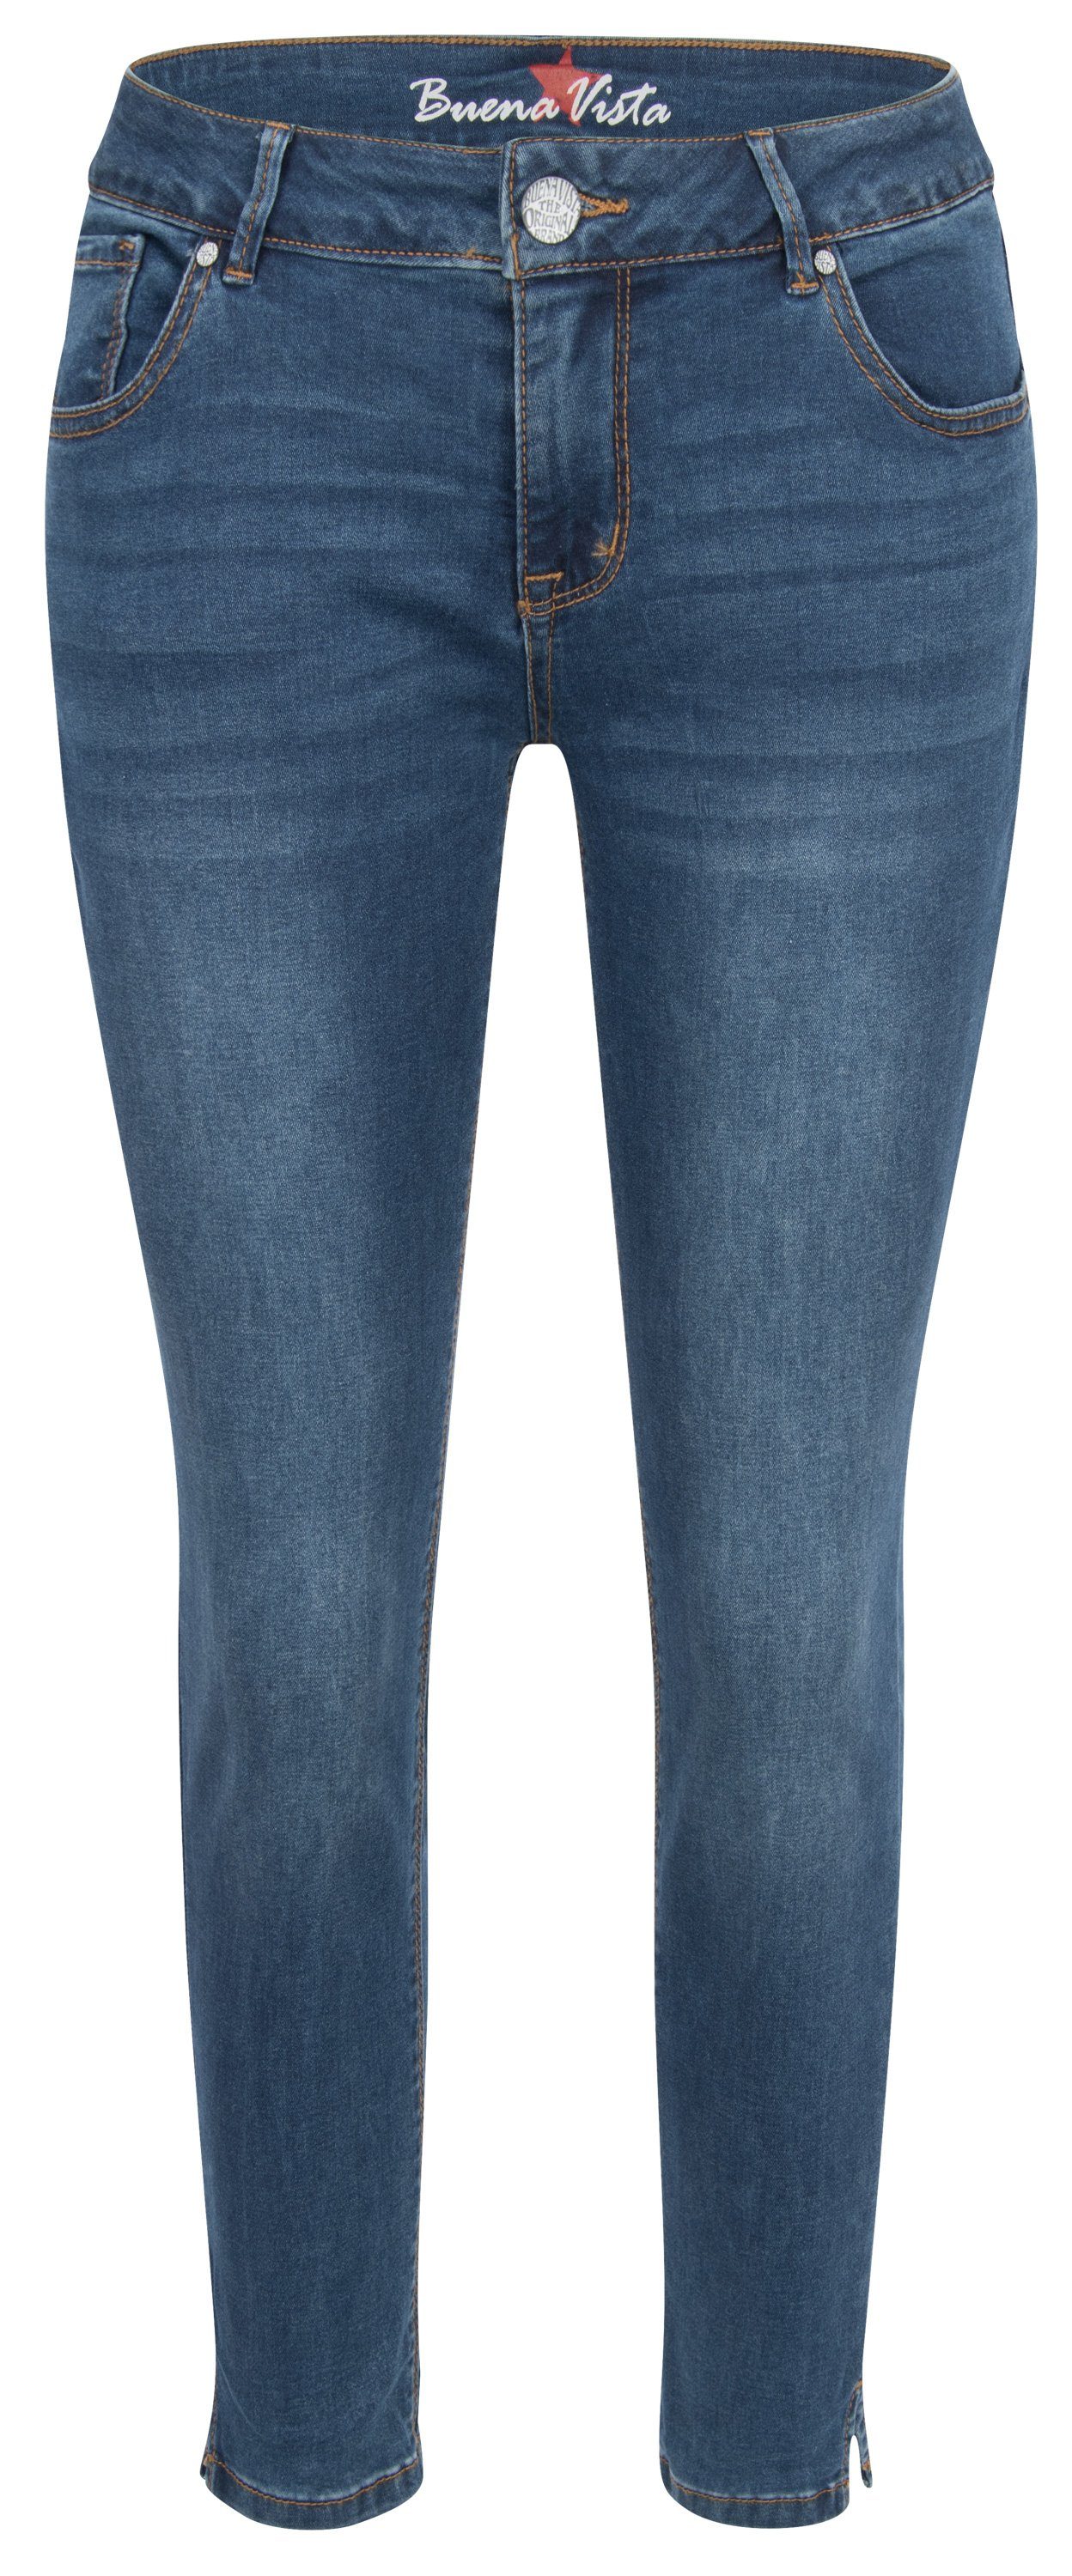 Buena Vista Stretch-Jeans BUENA VISTA ITALY 7/8 middle blue 888 B5281 102.4452 - Cozy Denim